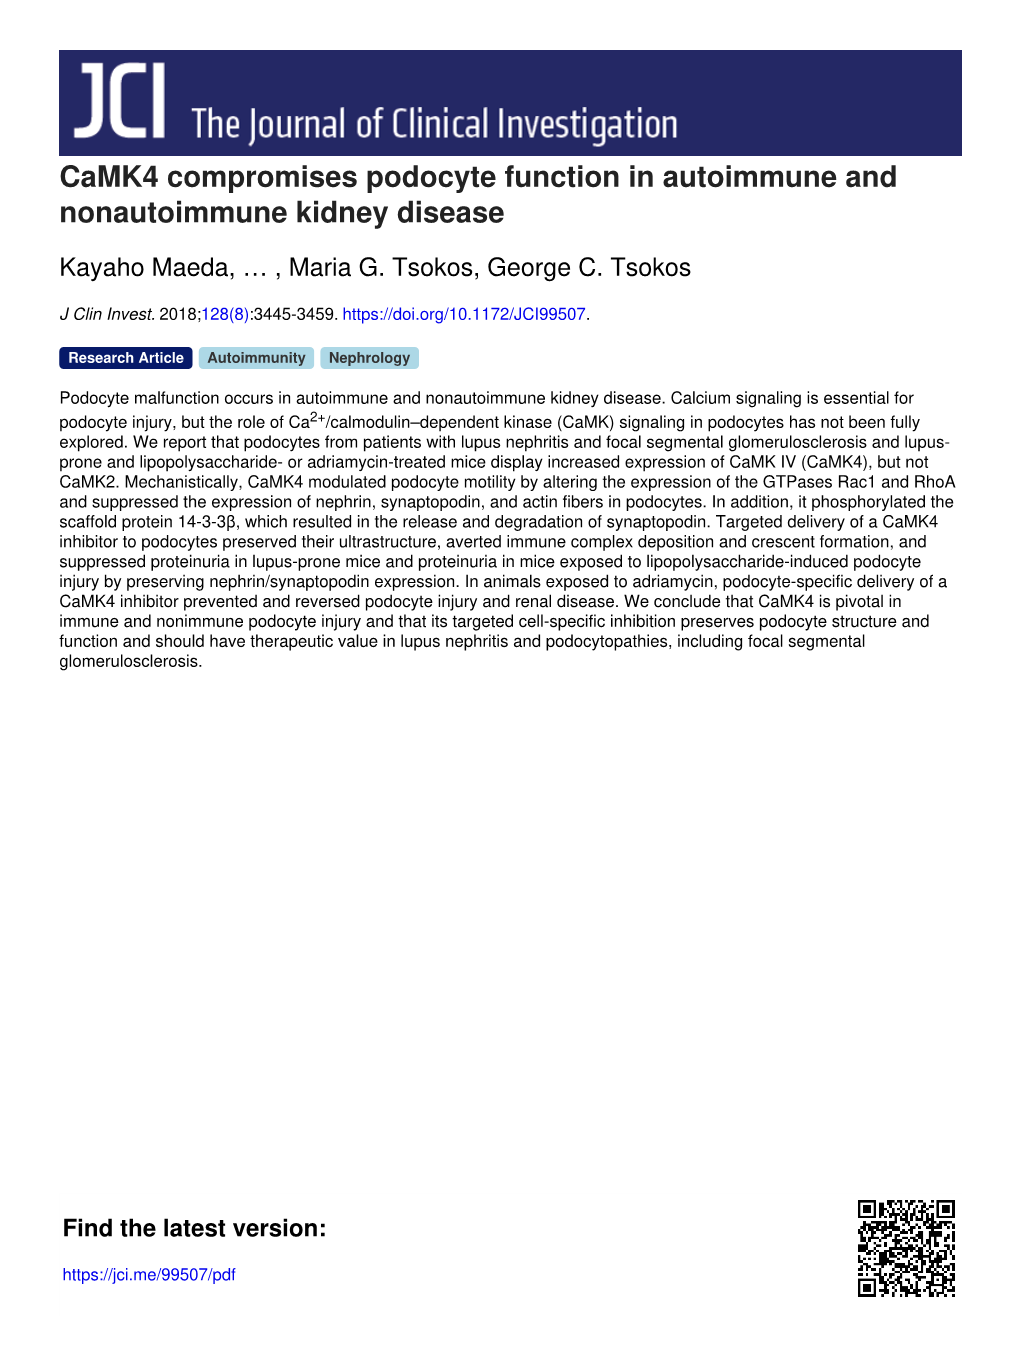 Camk4 Compromises Podocyte Function in Autoimmune and Nonautoimmune Kidney Disease